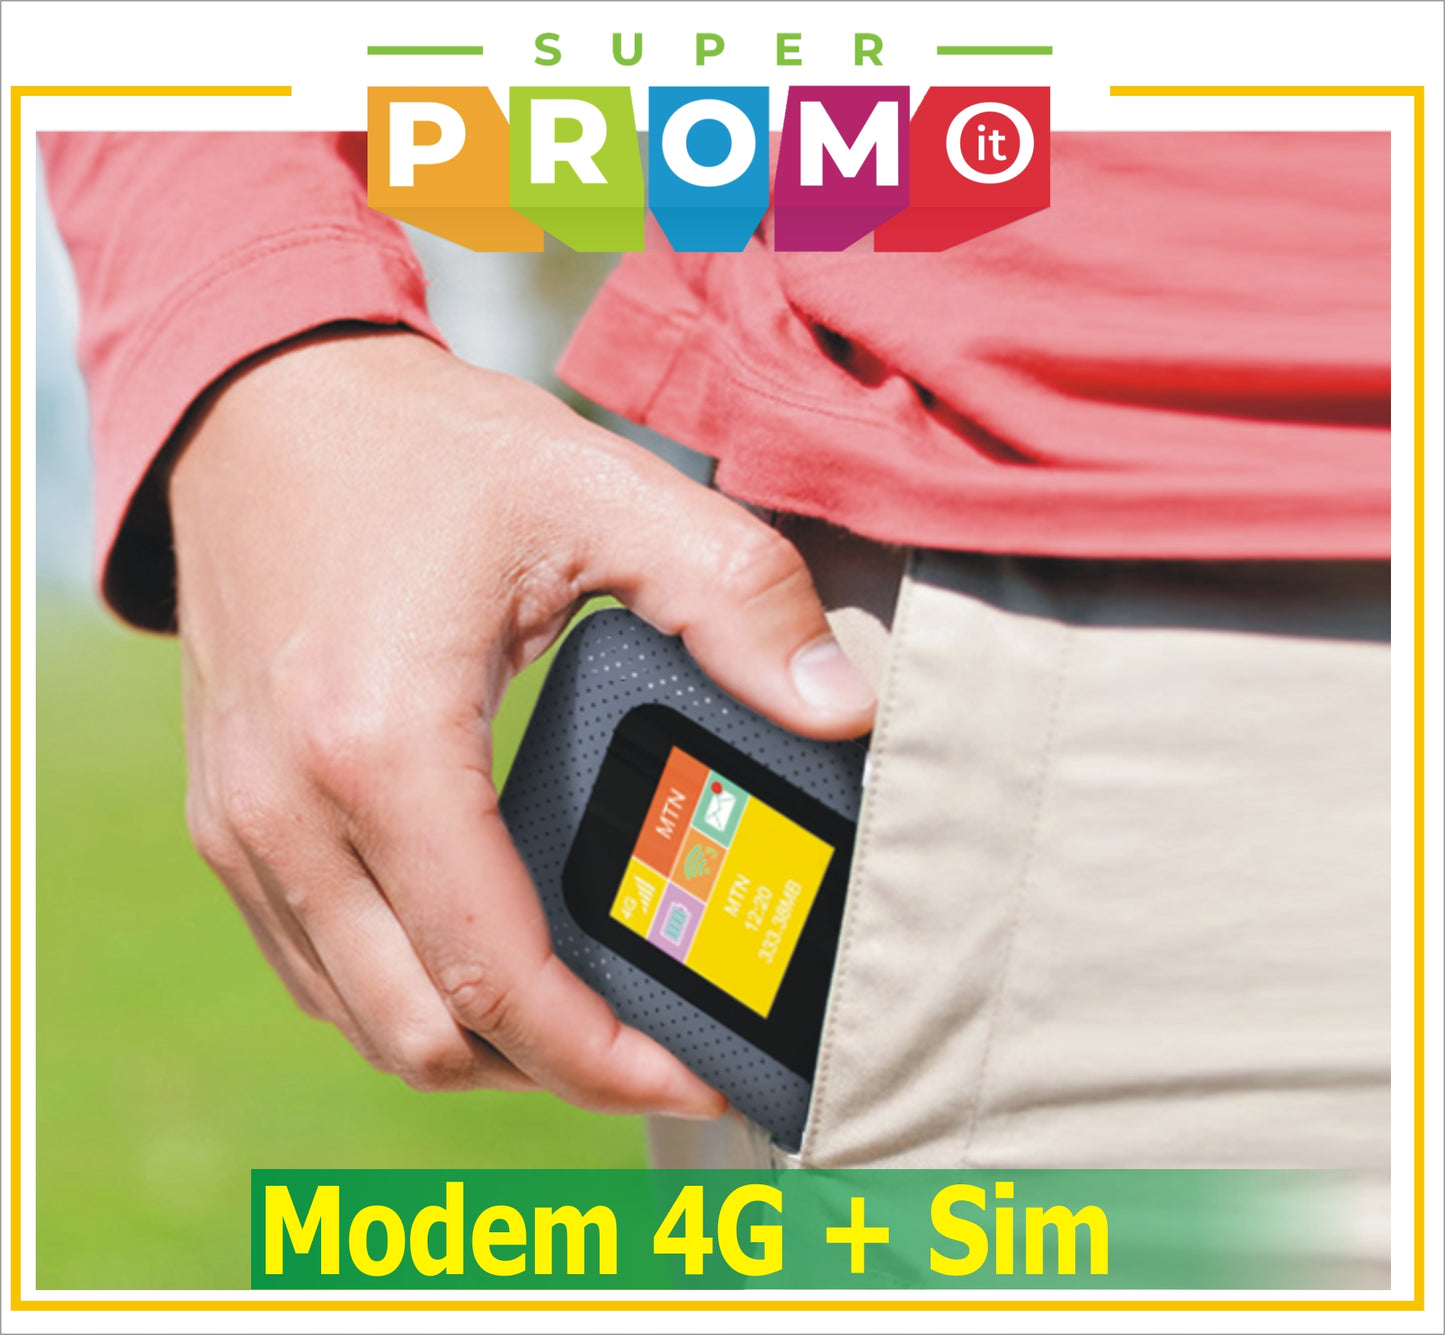 Subito Wifi - Modem Tenda 4G185 + Scheda Sim in dotazione